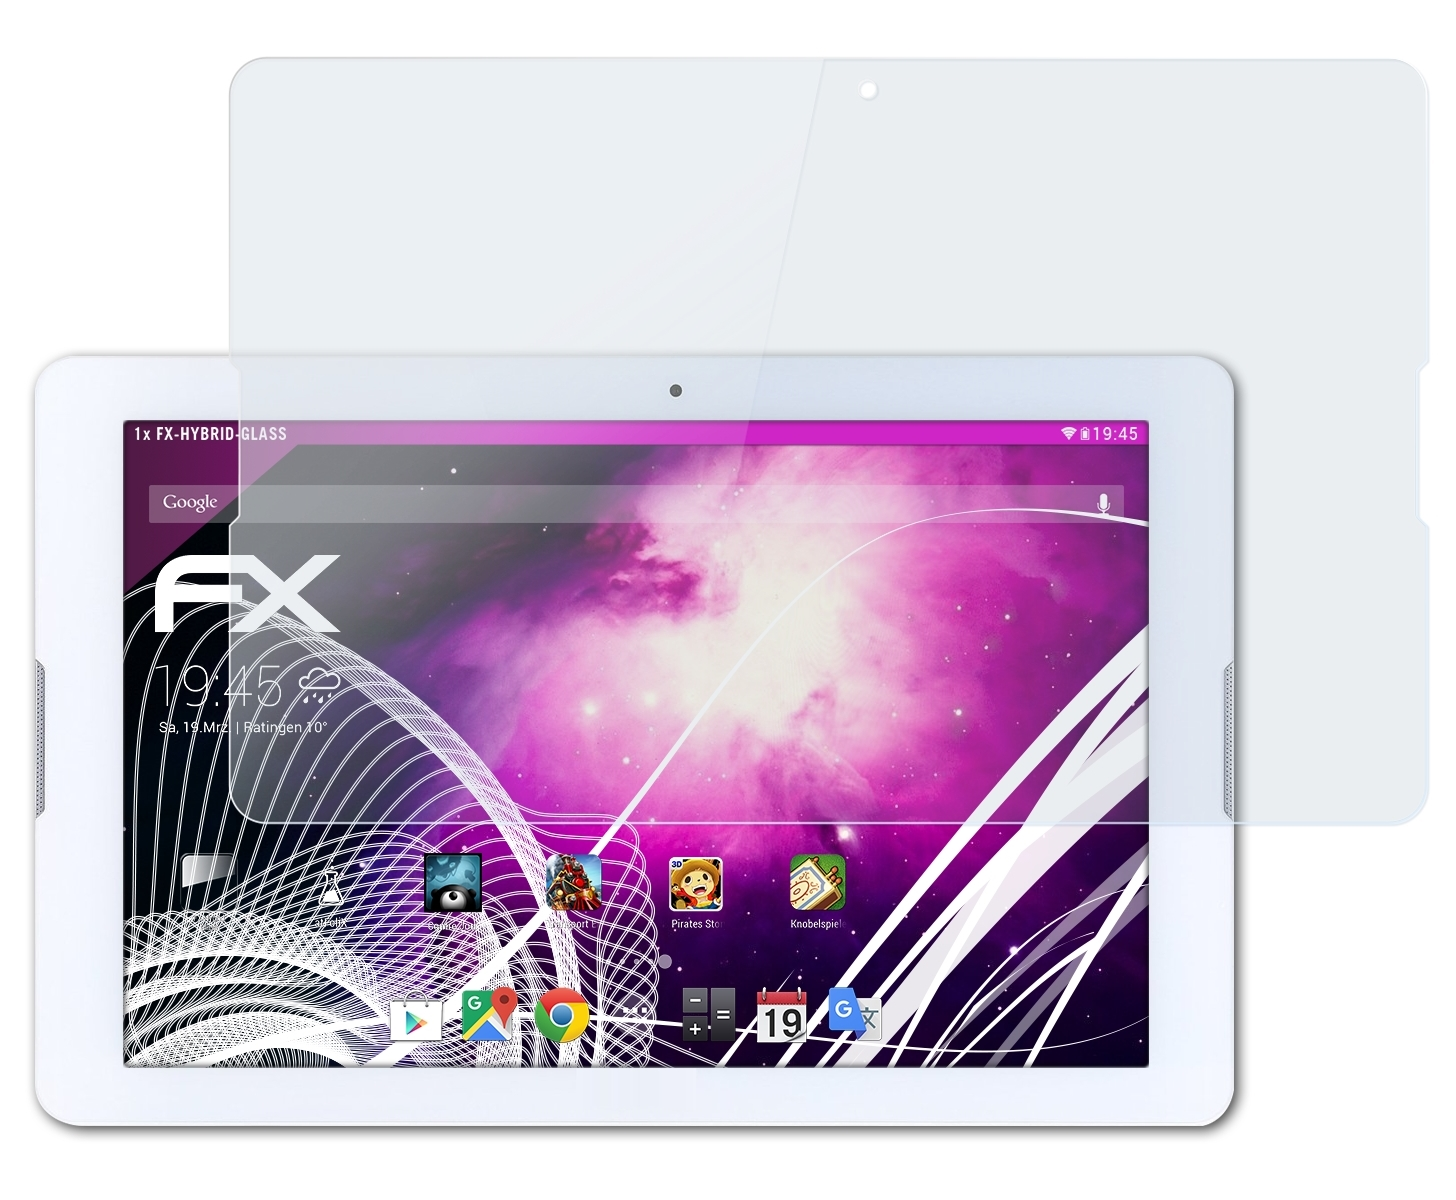 Acer FX-Hybrid-Glass ATFOLIX One Iconia 10 (B3-A20)) Schutzglas(für